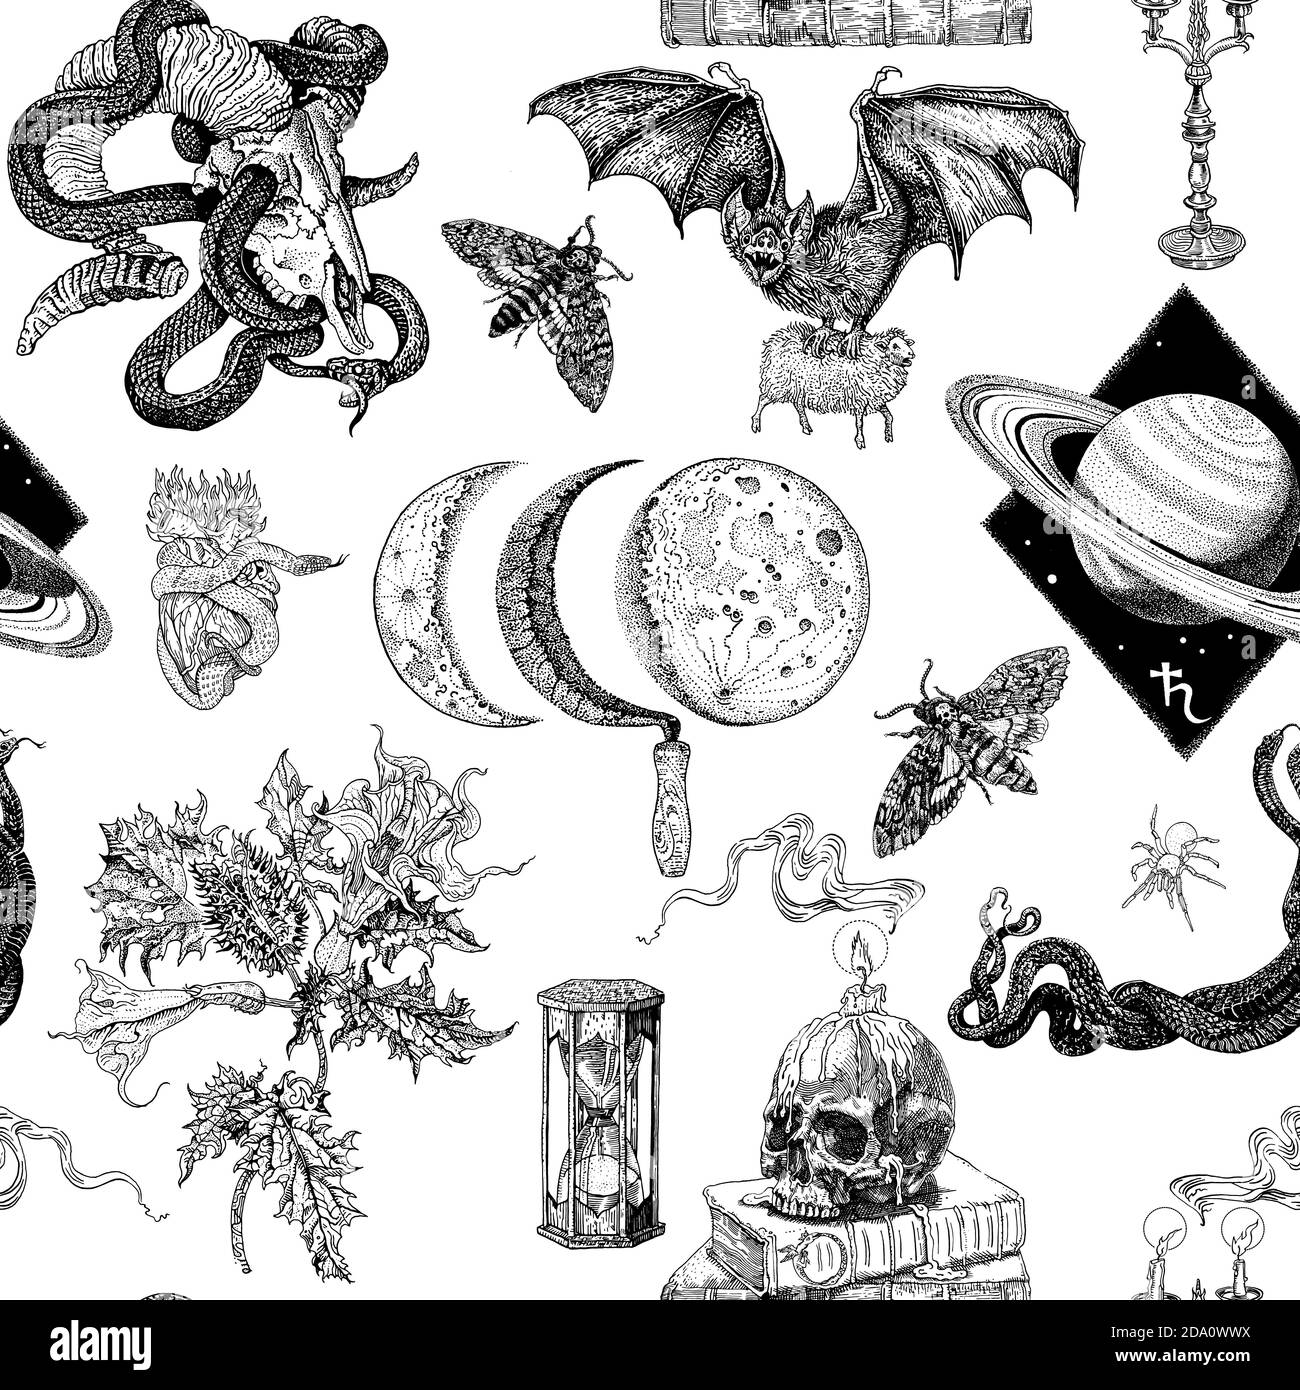 Black magic seamless pattern. Skulls, candles, flames, snakes, bat, moon, datura, saturn, hourglass. Hand drawn engraving tattoo style illustration. Stock Vector